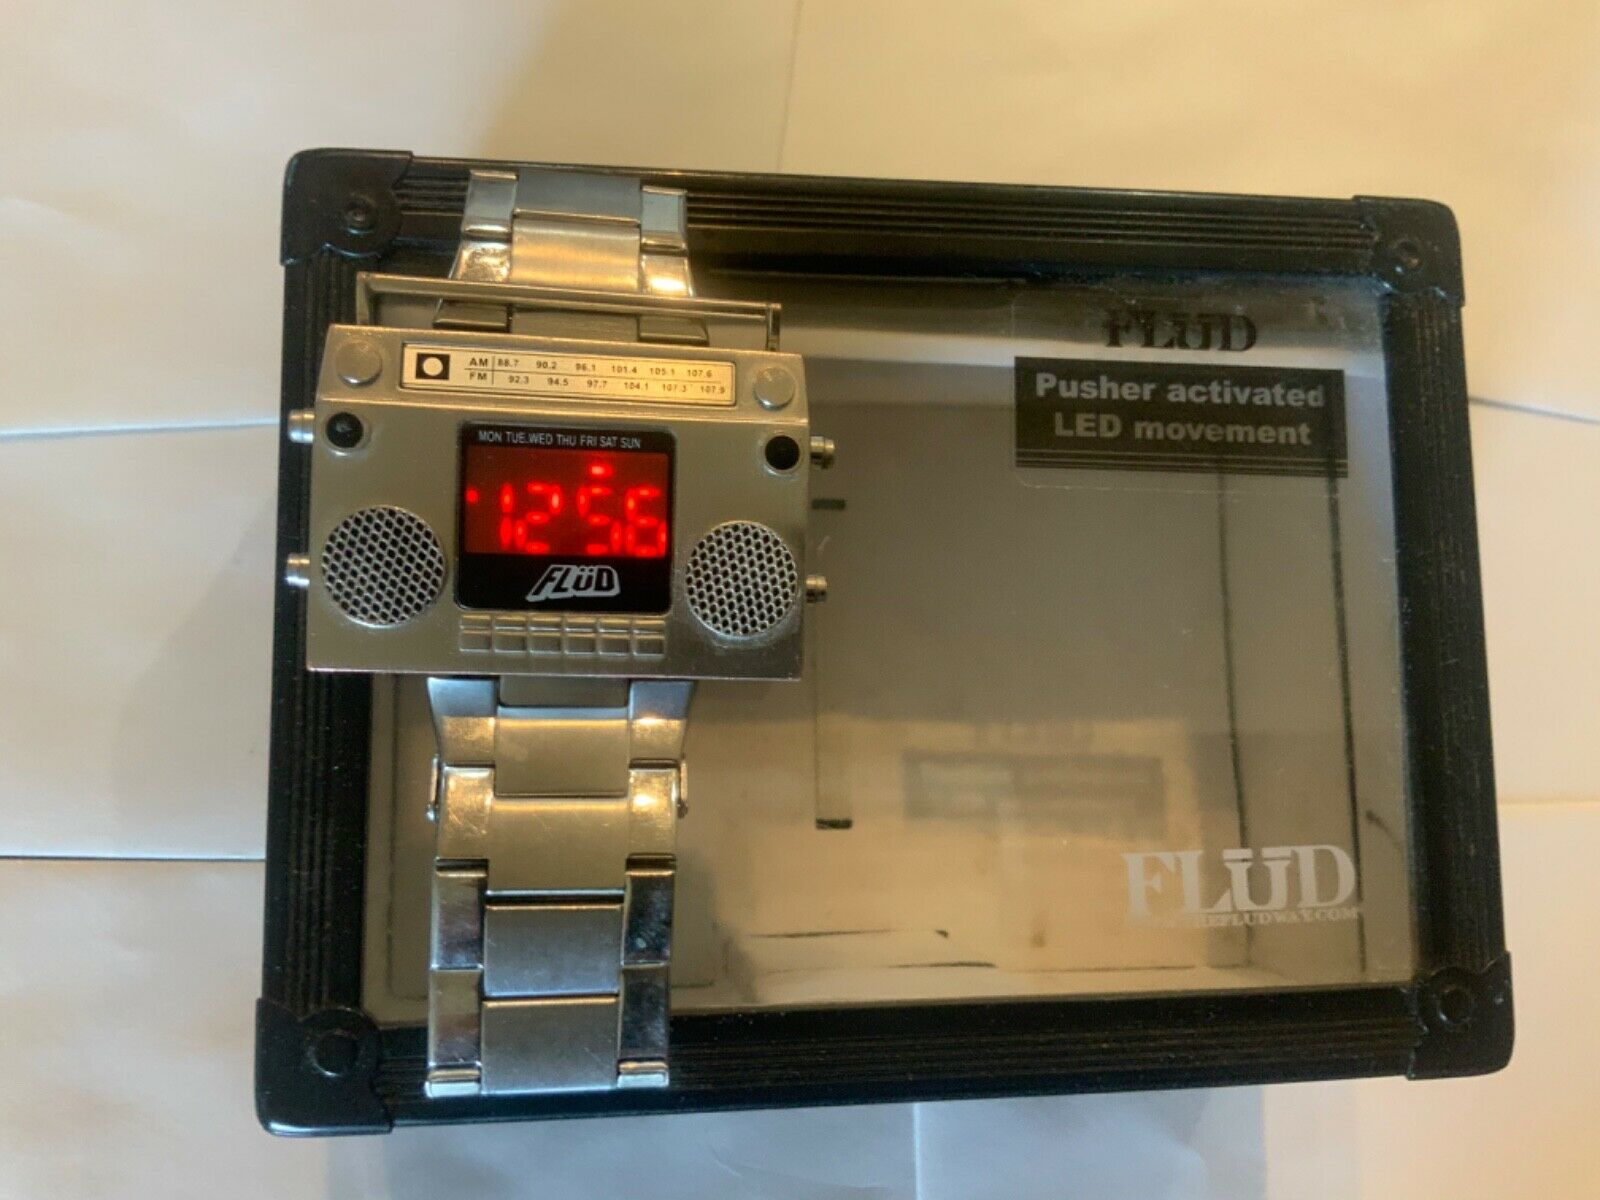 Flud Men's Boombox Gold Retro LED Digital Watch